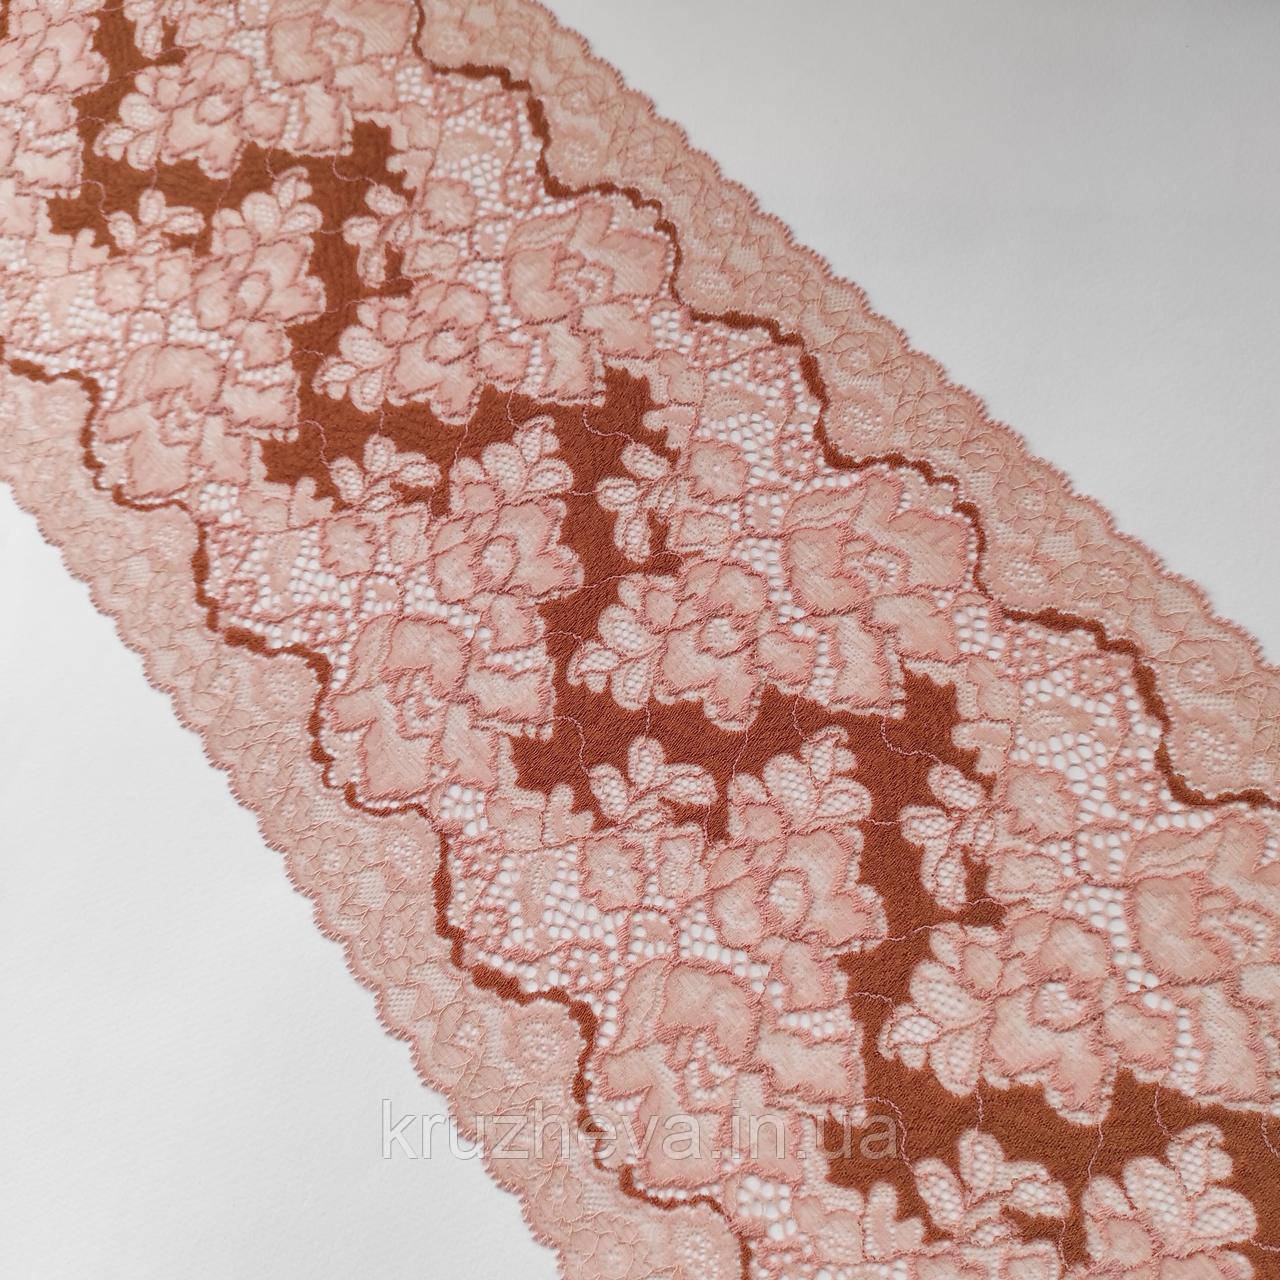 Стрейчеве (еластичне) мереживо рожево-персикового з коричневим кольору, ширина 21 см.